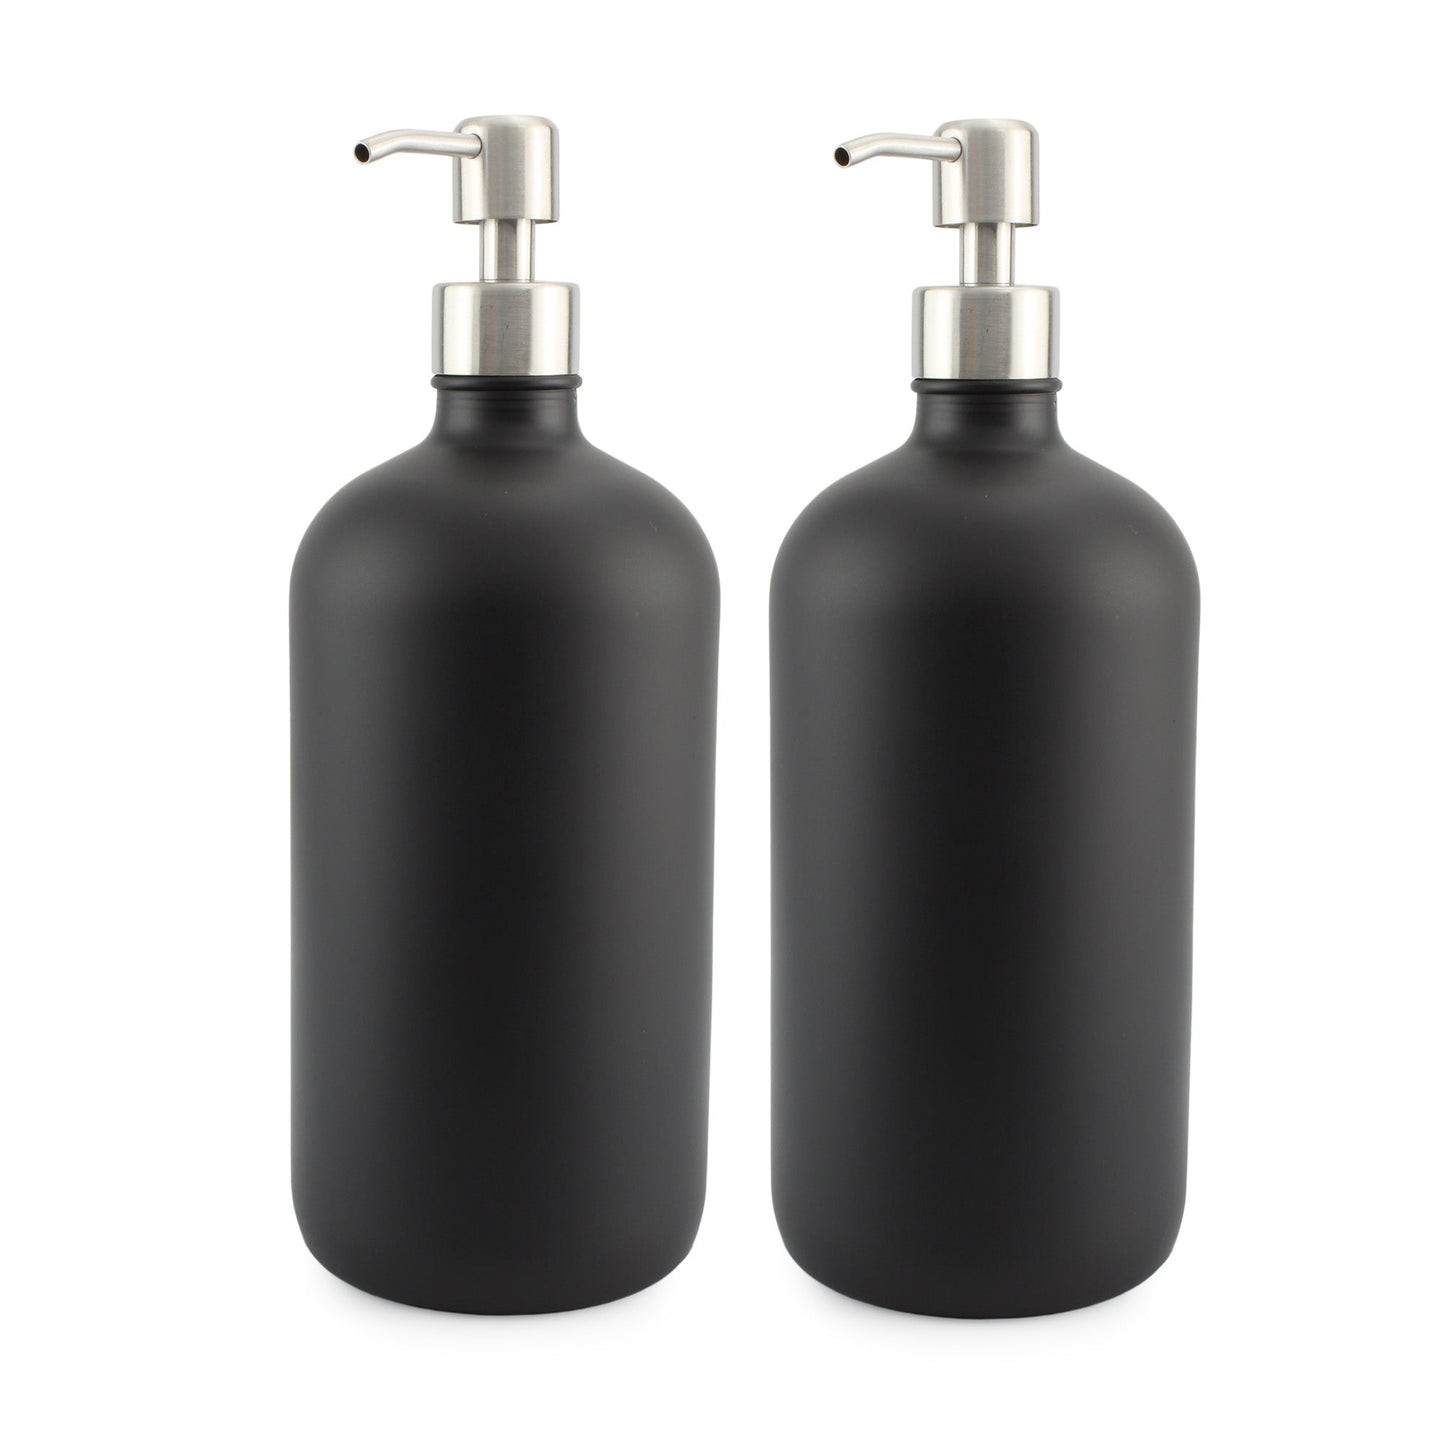 32oz Black Glass Pump Bottles w/ Stainless Steel Pumps (2-Pack) - sh2147cb0